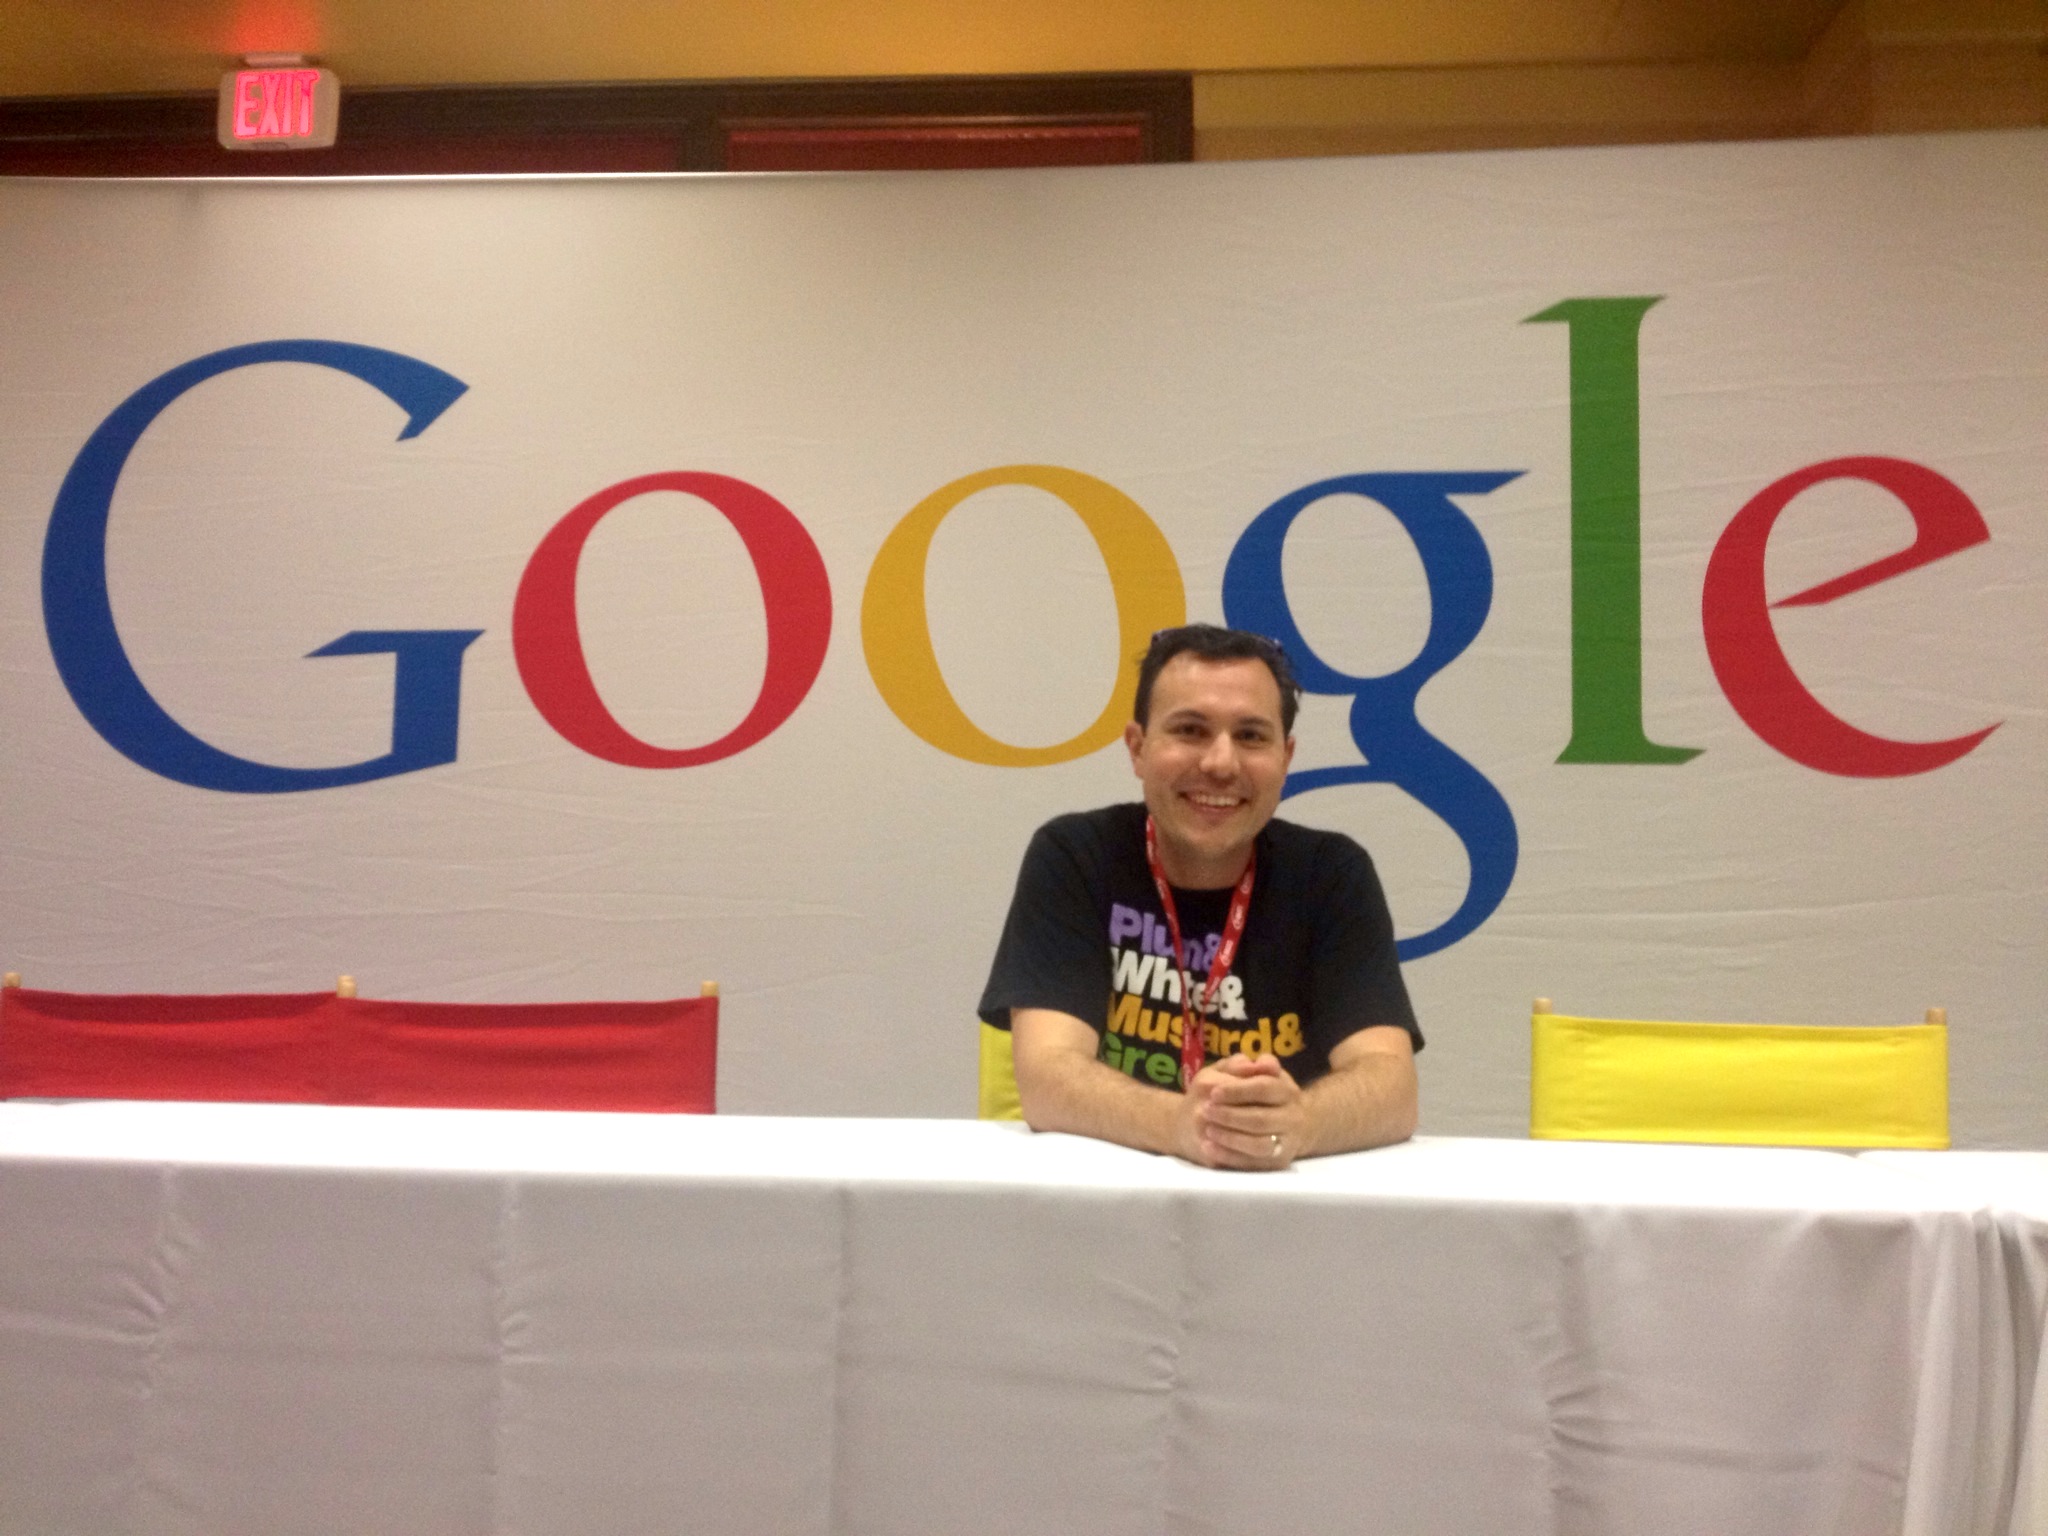 Bill Selak with Google logo behind